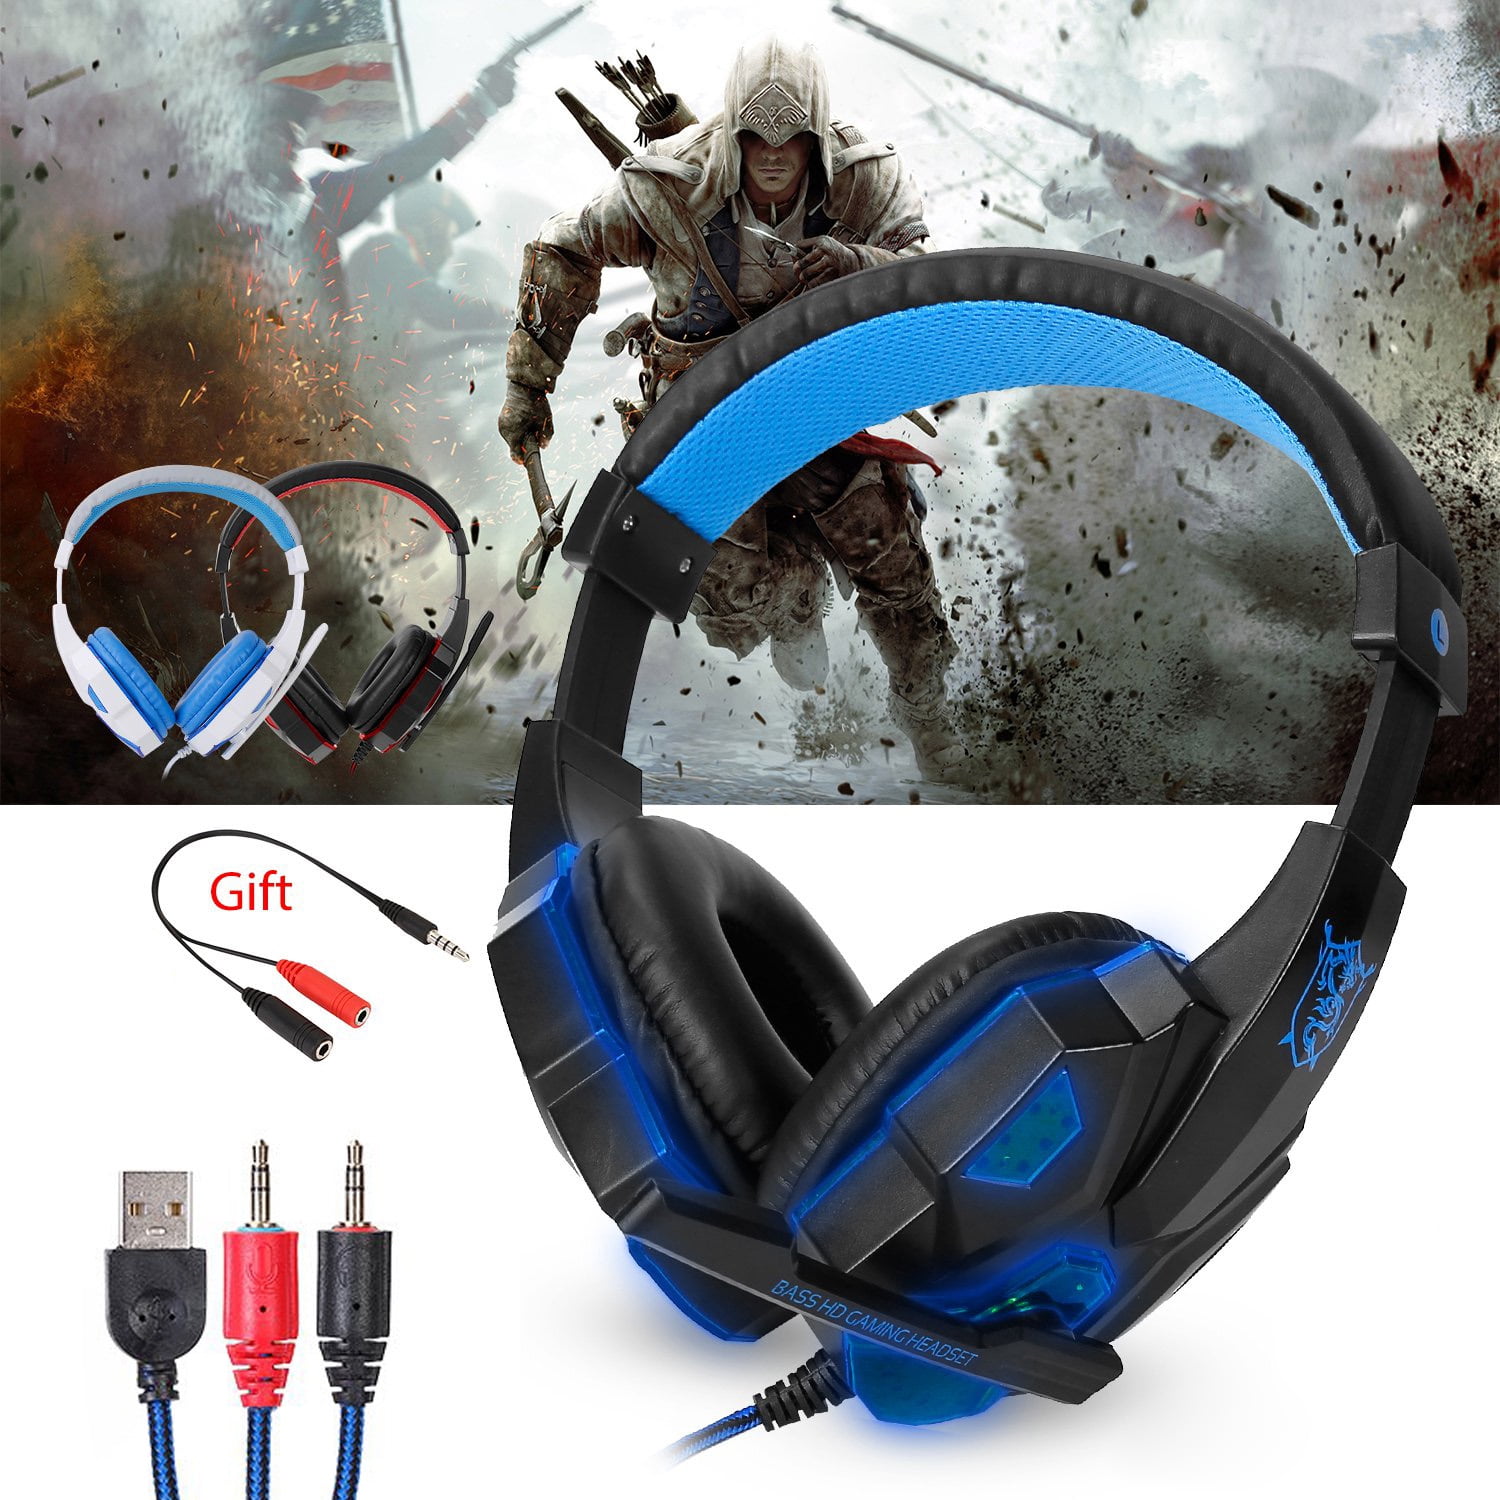 Skuffelse illoyalitet Playful Gaming Headset GT Stereo HiFi, iNova Headphone with Microphone for PS4  Xbox360 PC Mac SmartPhone,Blue - Walmart.com